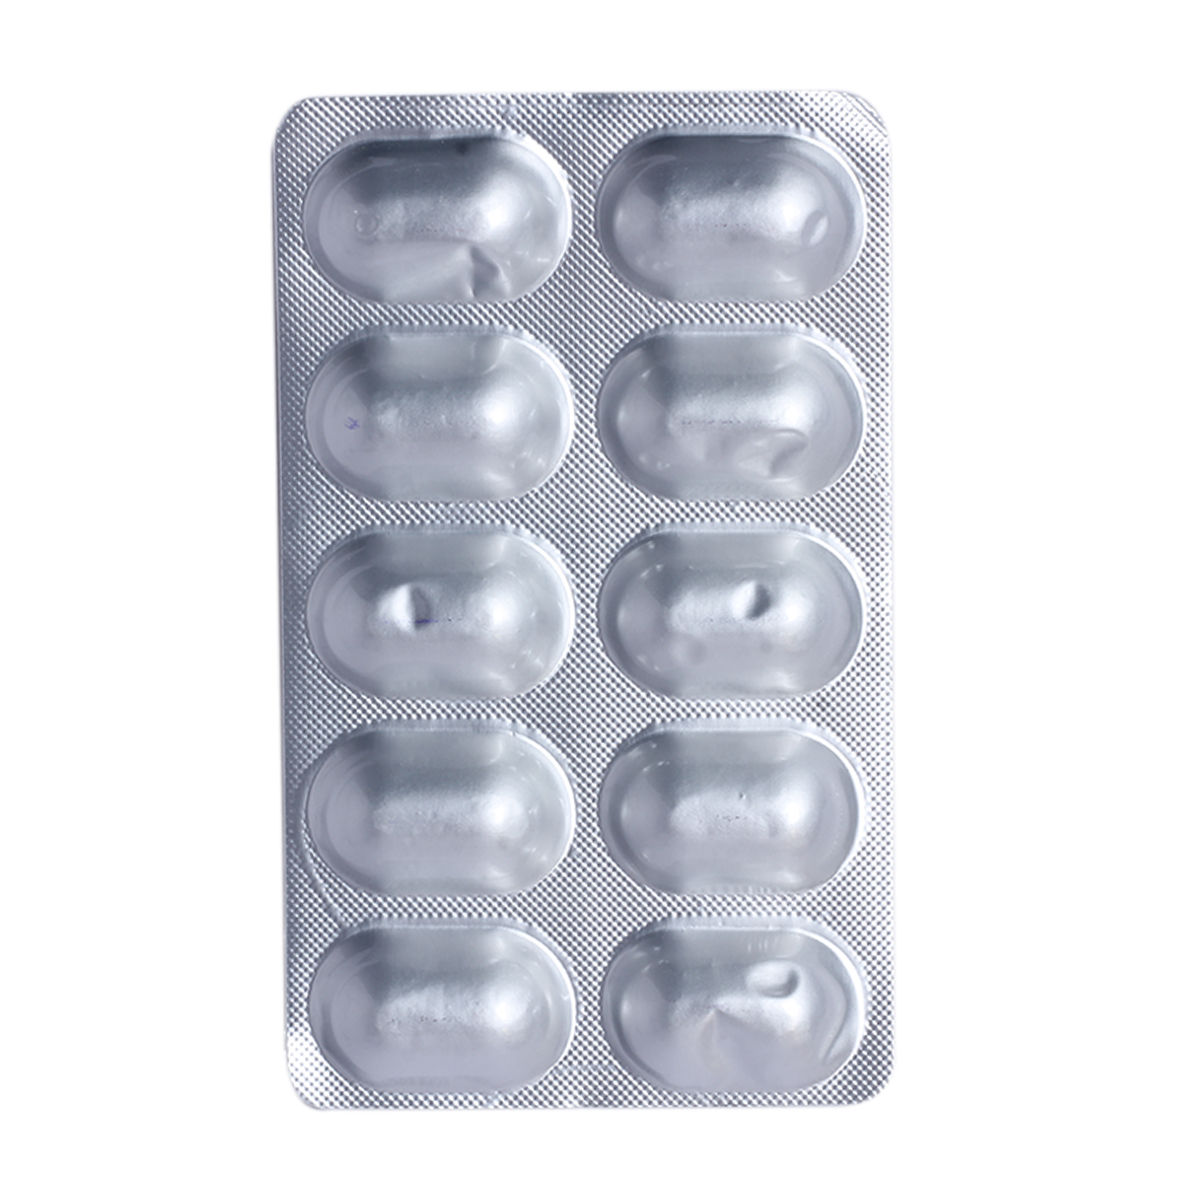 Abrophyll DM Tablet 10's, Pack of 10 TABLETS